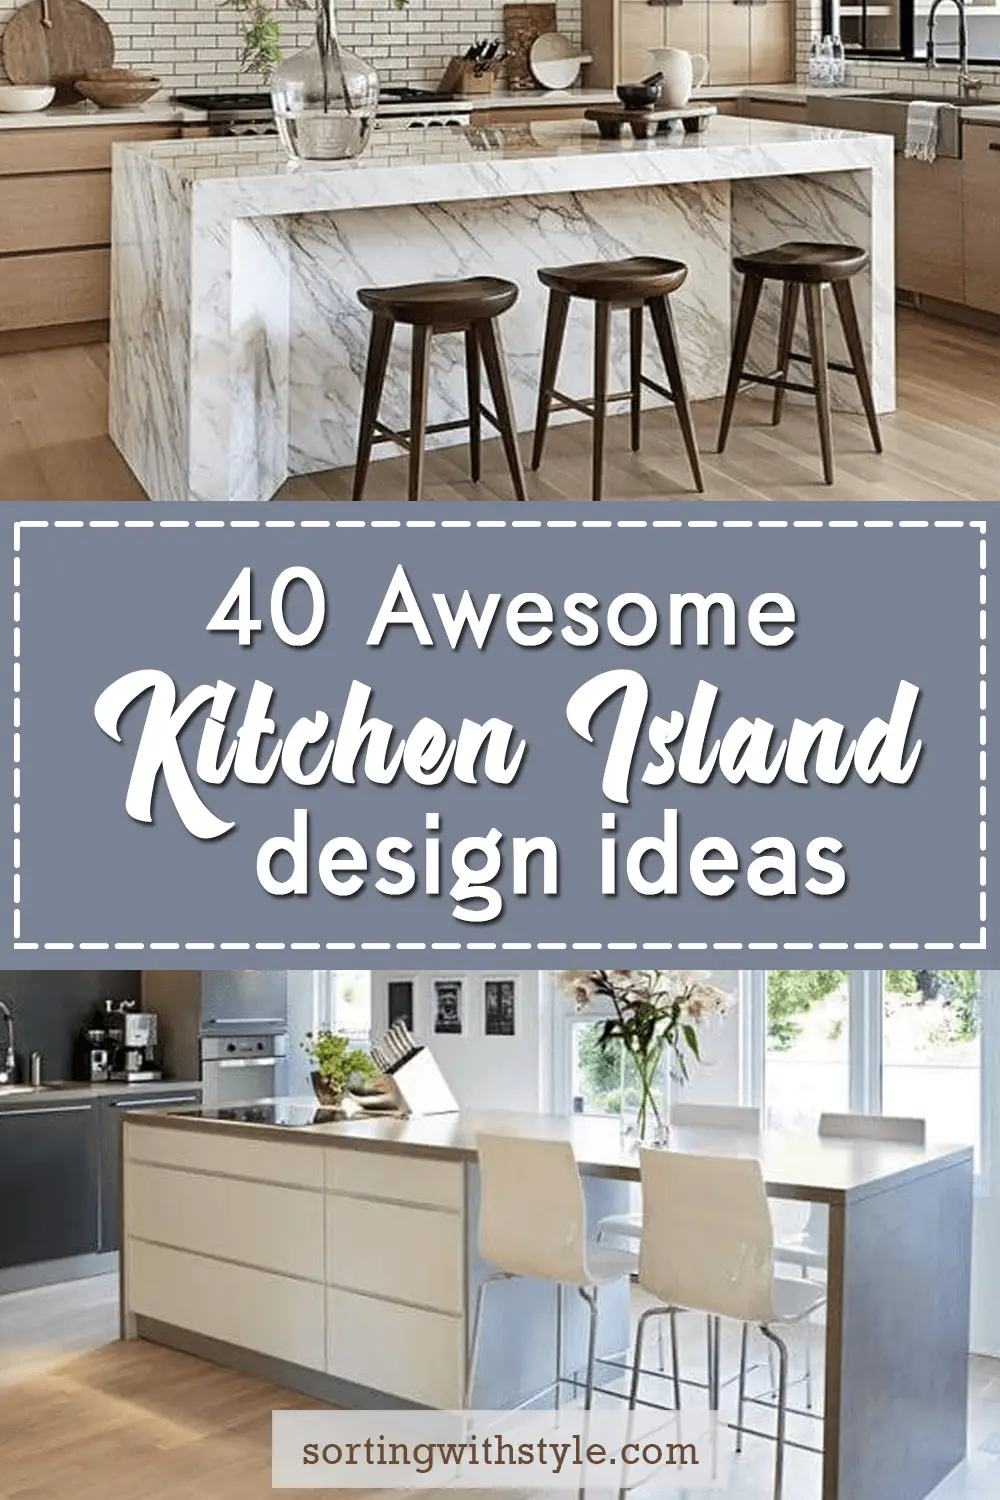 40 Awesome Kitchen Island Design Ideas, Kitchen Island Design Ideas Images